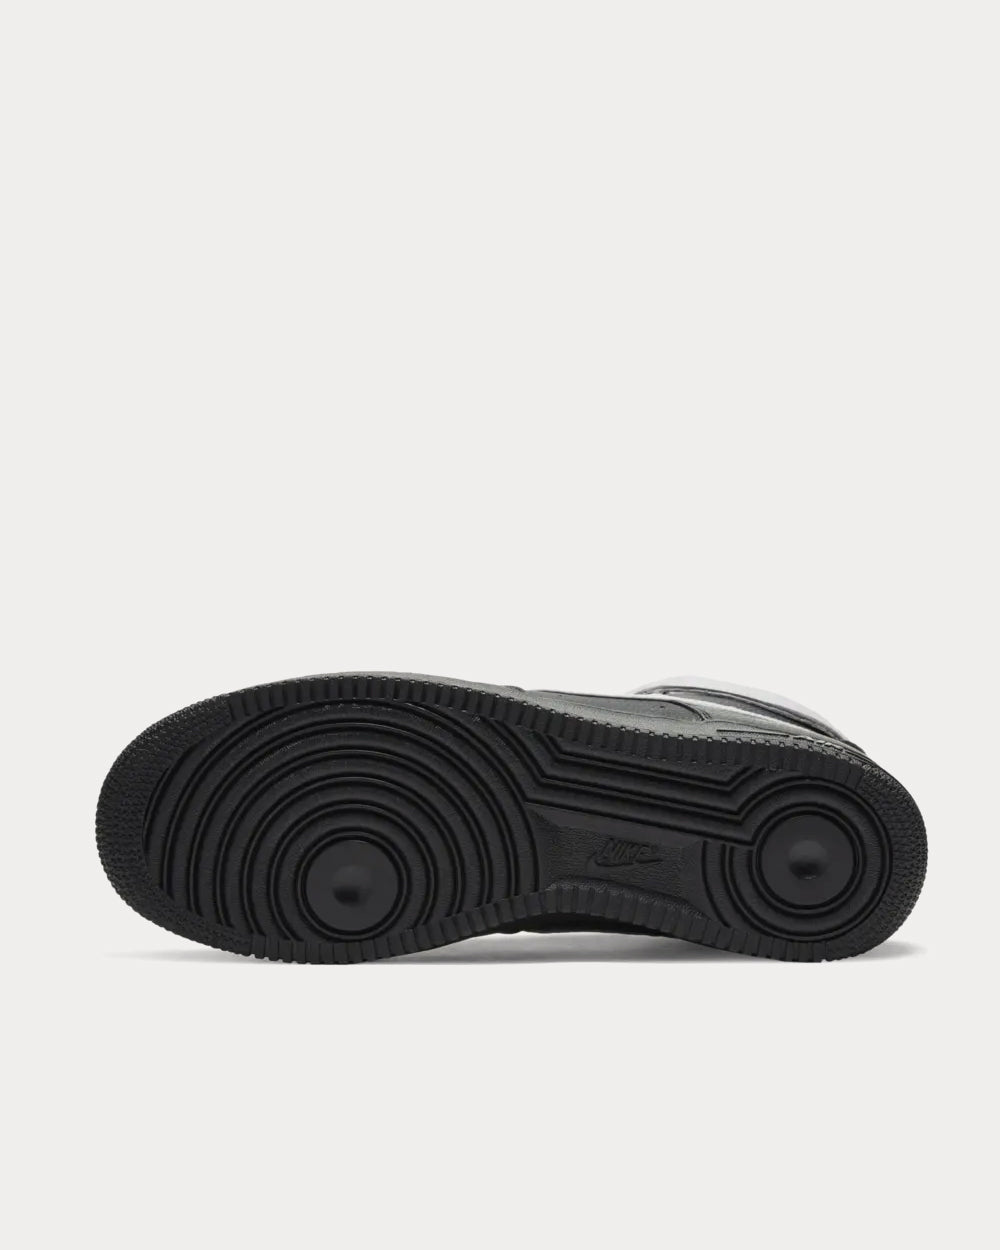 Nike x ALYX - Air Force 1 Black High Top Sneakers